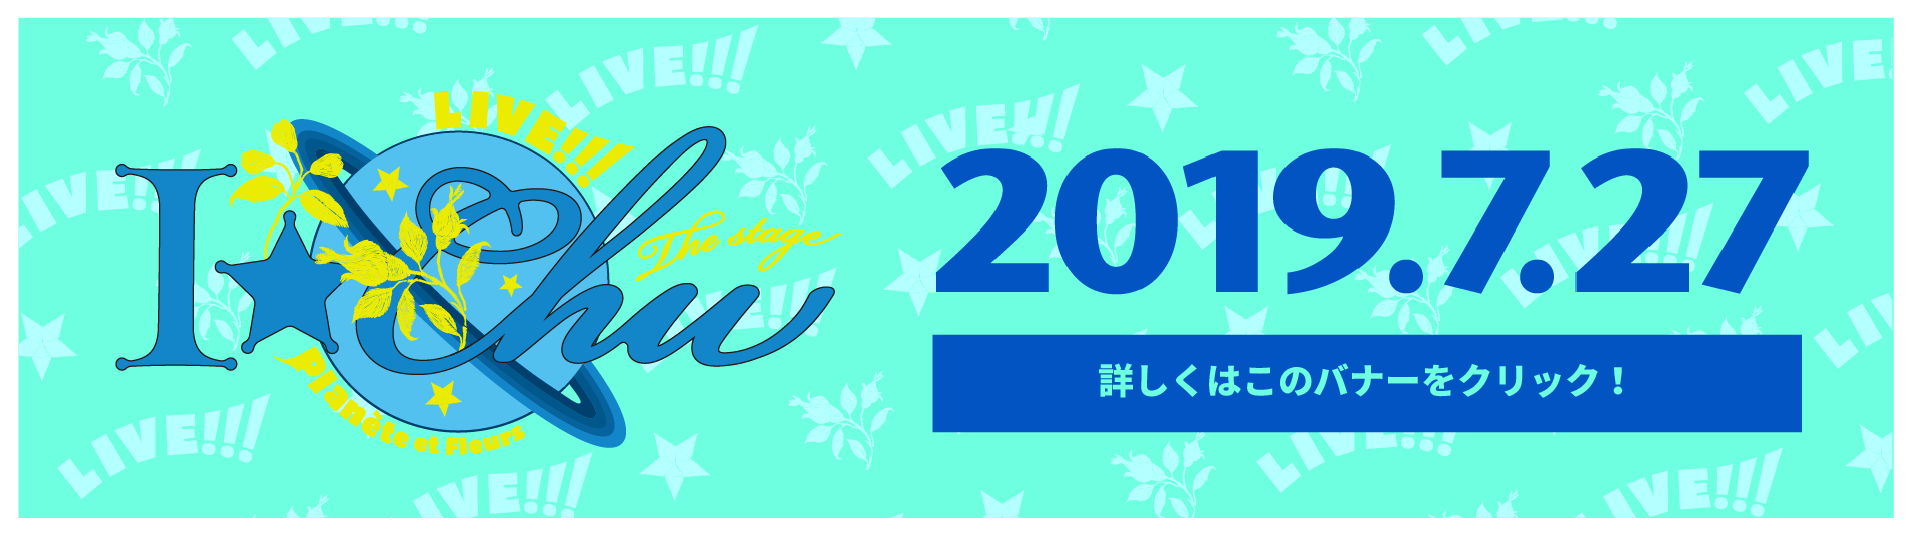 7/27 Live!!!アイ★チュウ ザ・ステージ 〜Planète et Fleurs〜